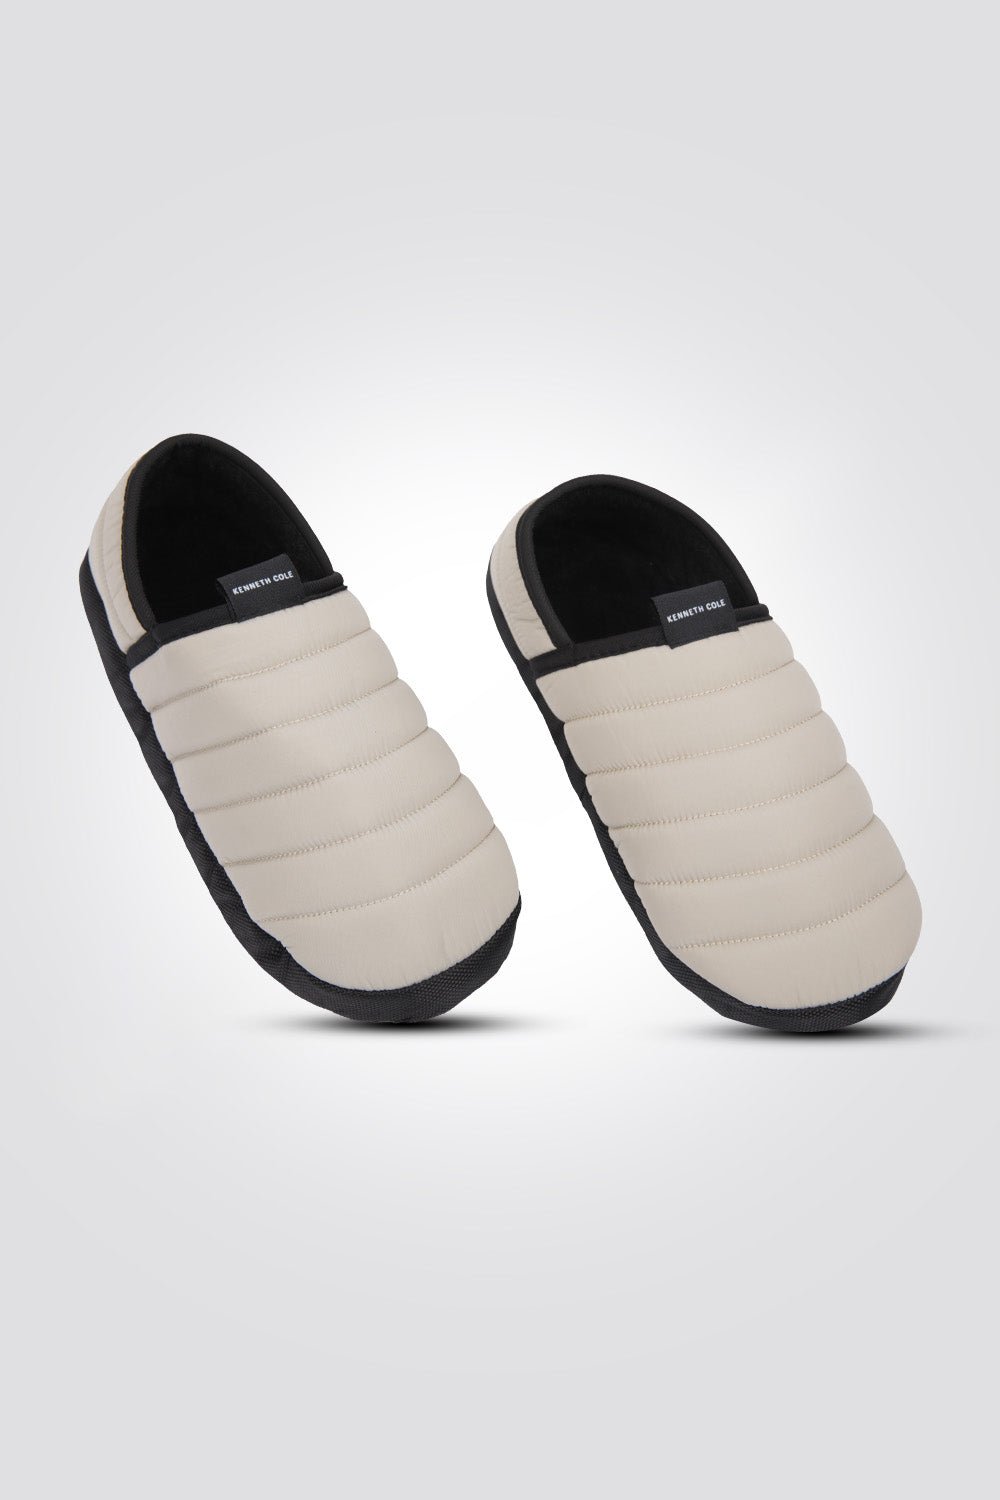 KENNETH COLE - נעלי בית לגברים בצבע בז' - MASHBIR//365